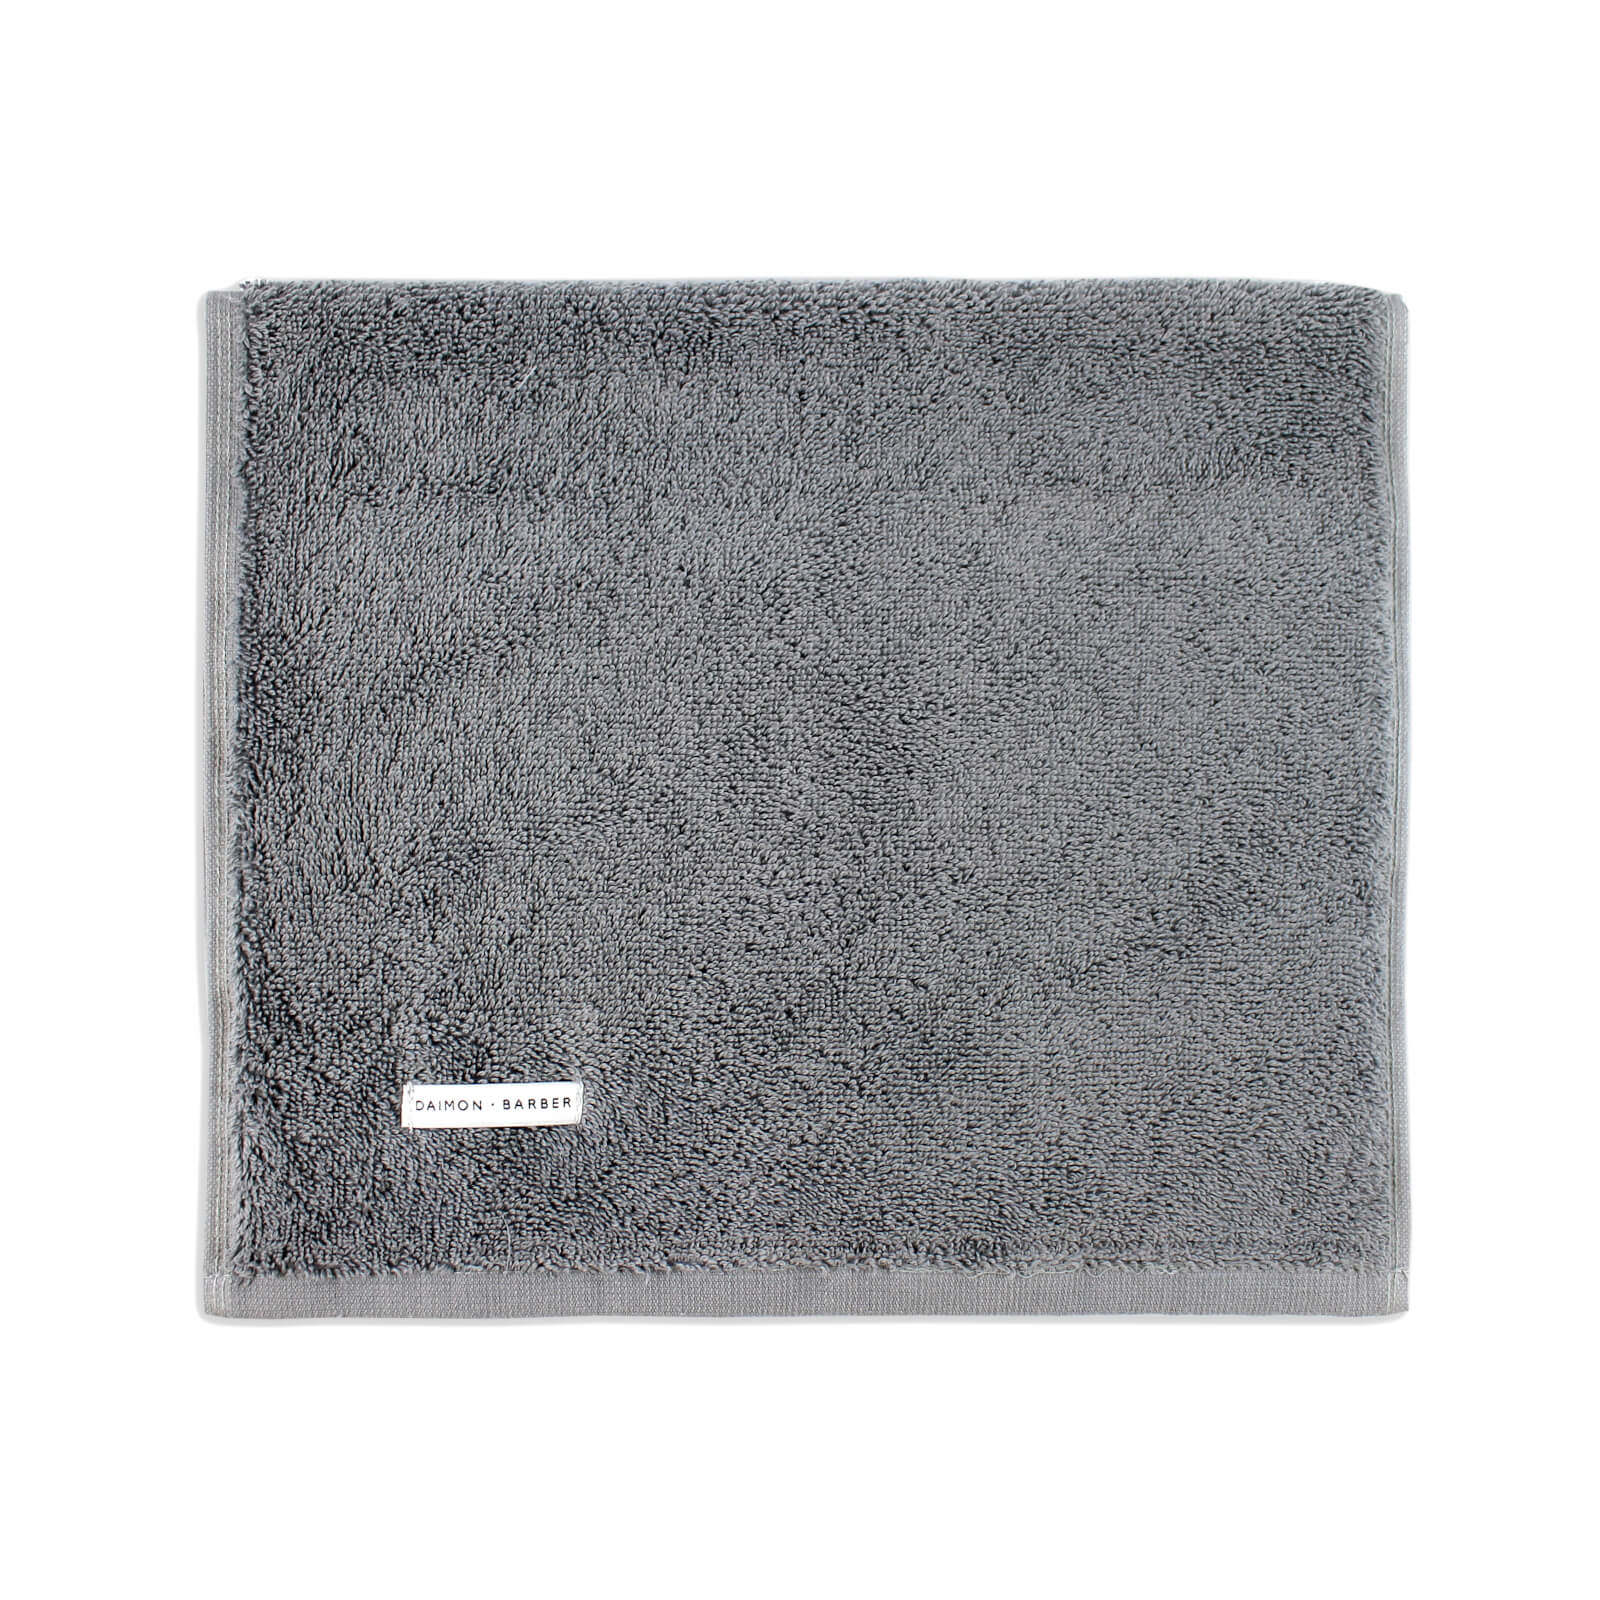 Daimon Barber Travel Towel Grey 600gsm (30x70cm) with logo